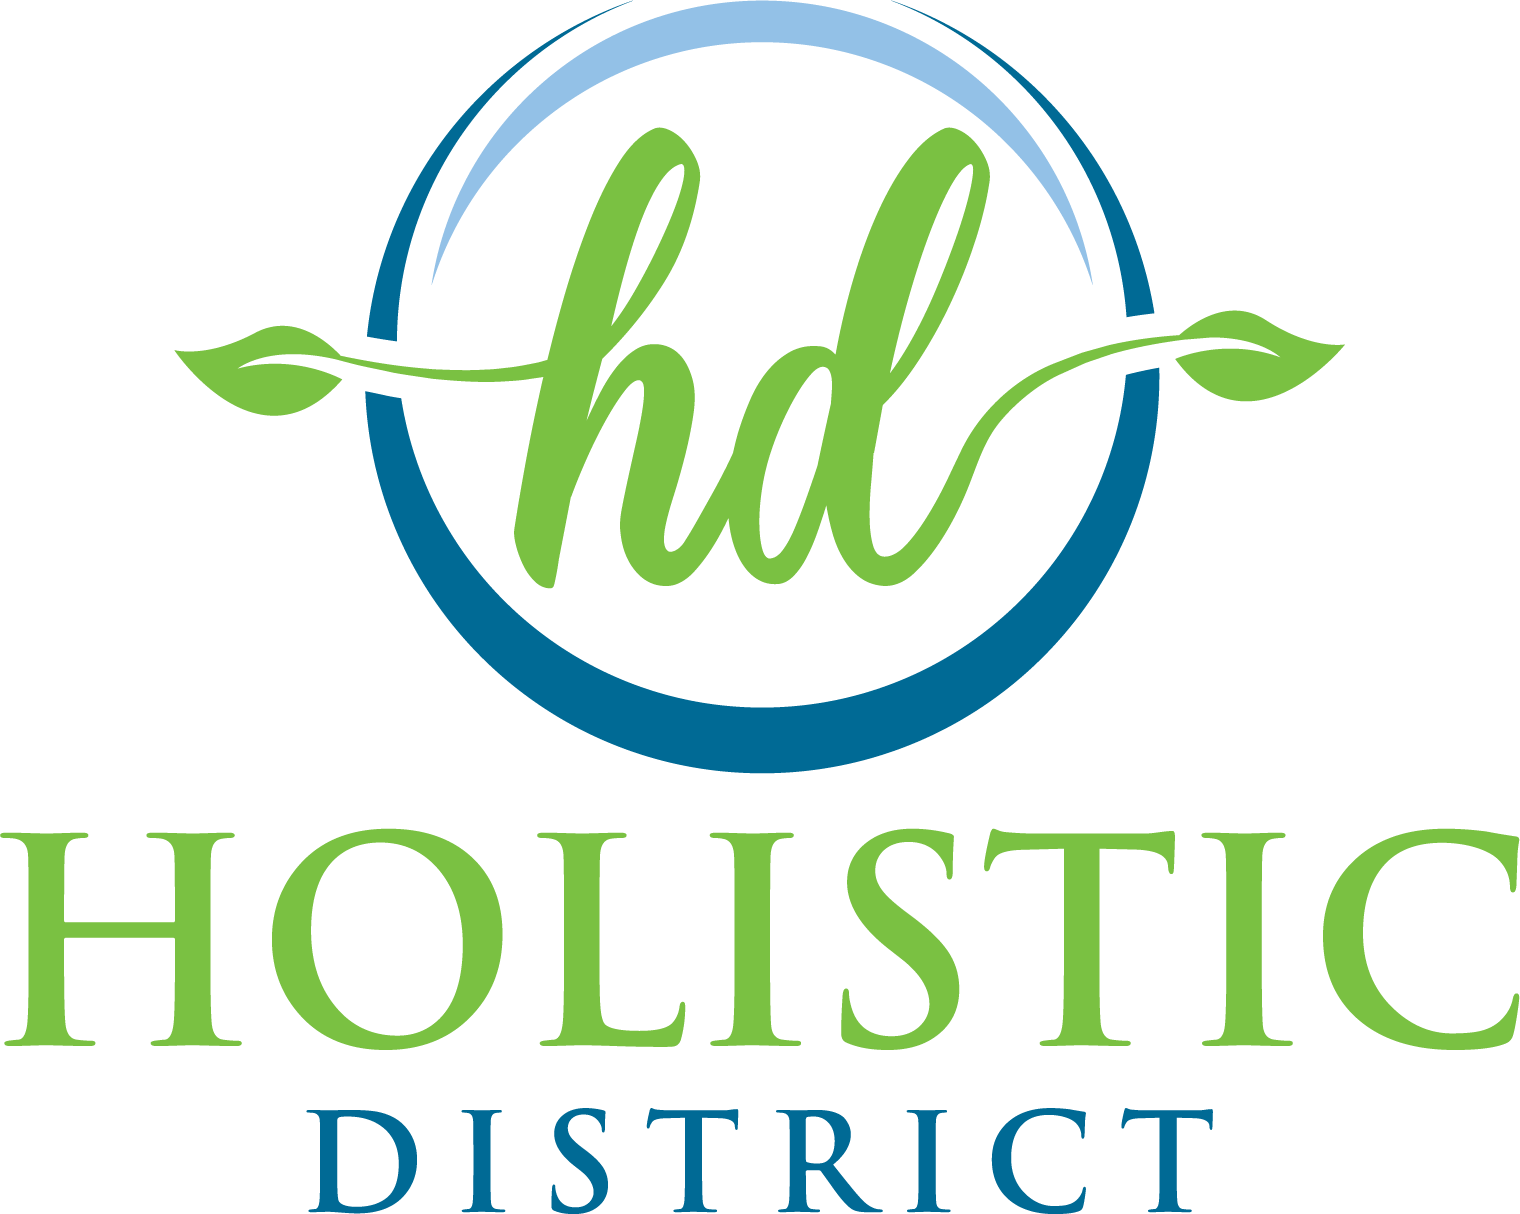 Holistic District